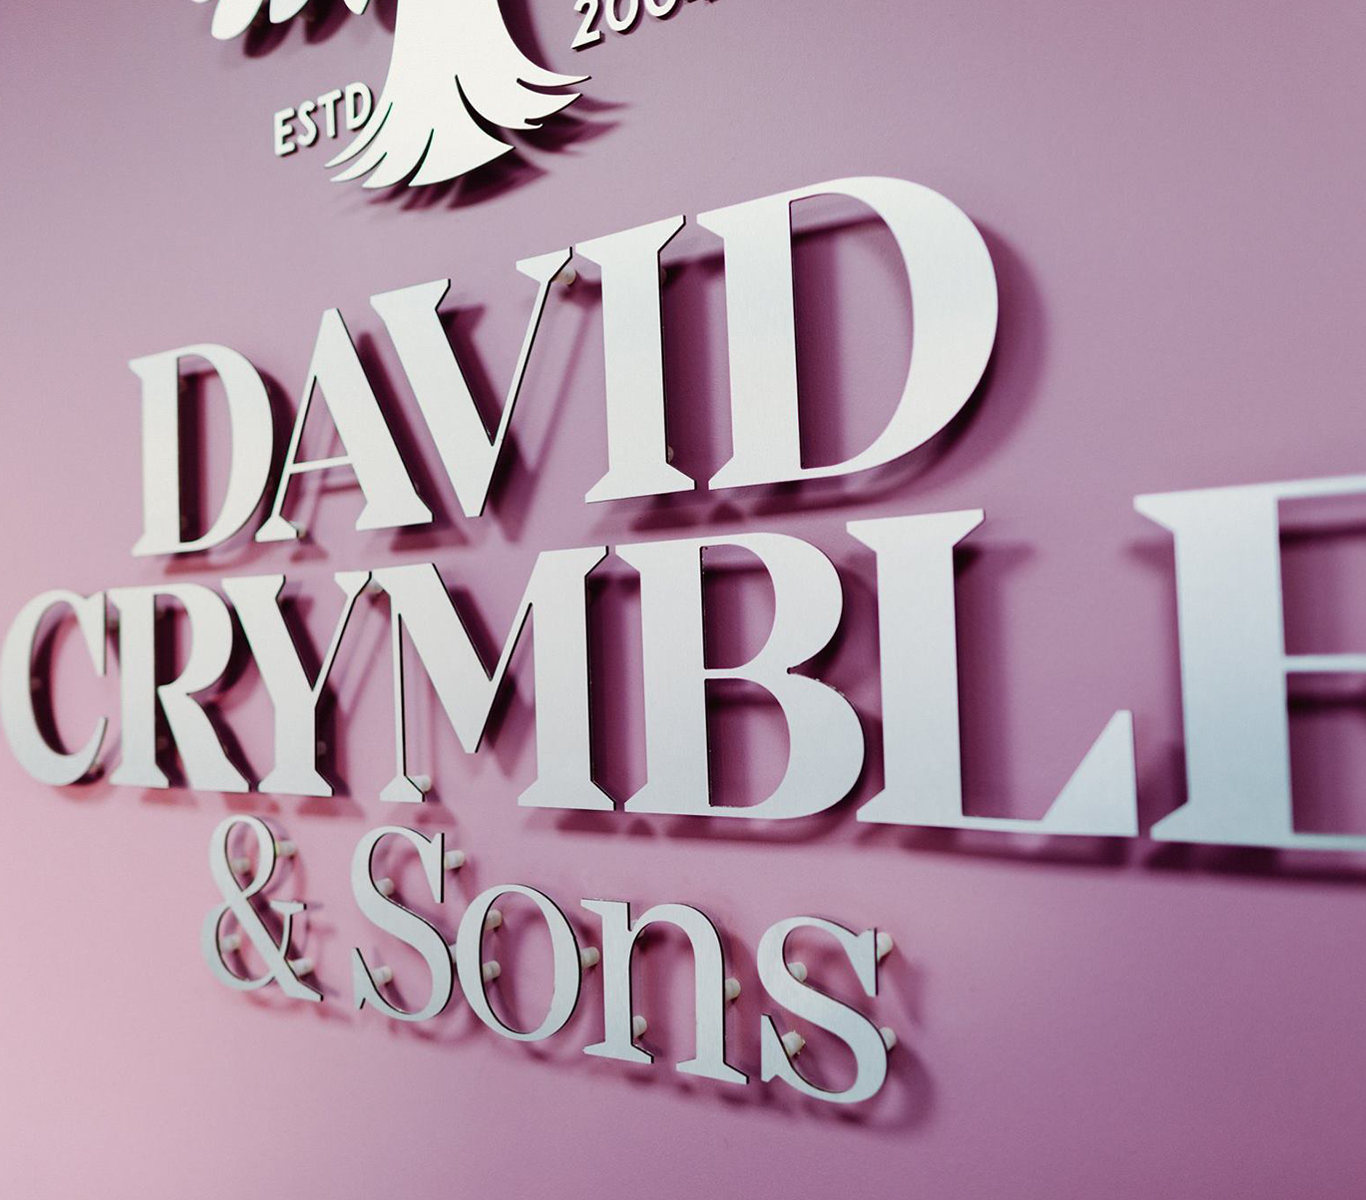 DAVID CRYMBLE & SONS